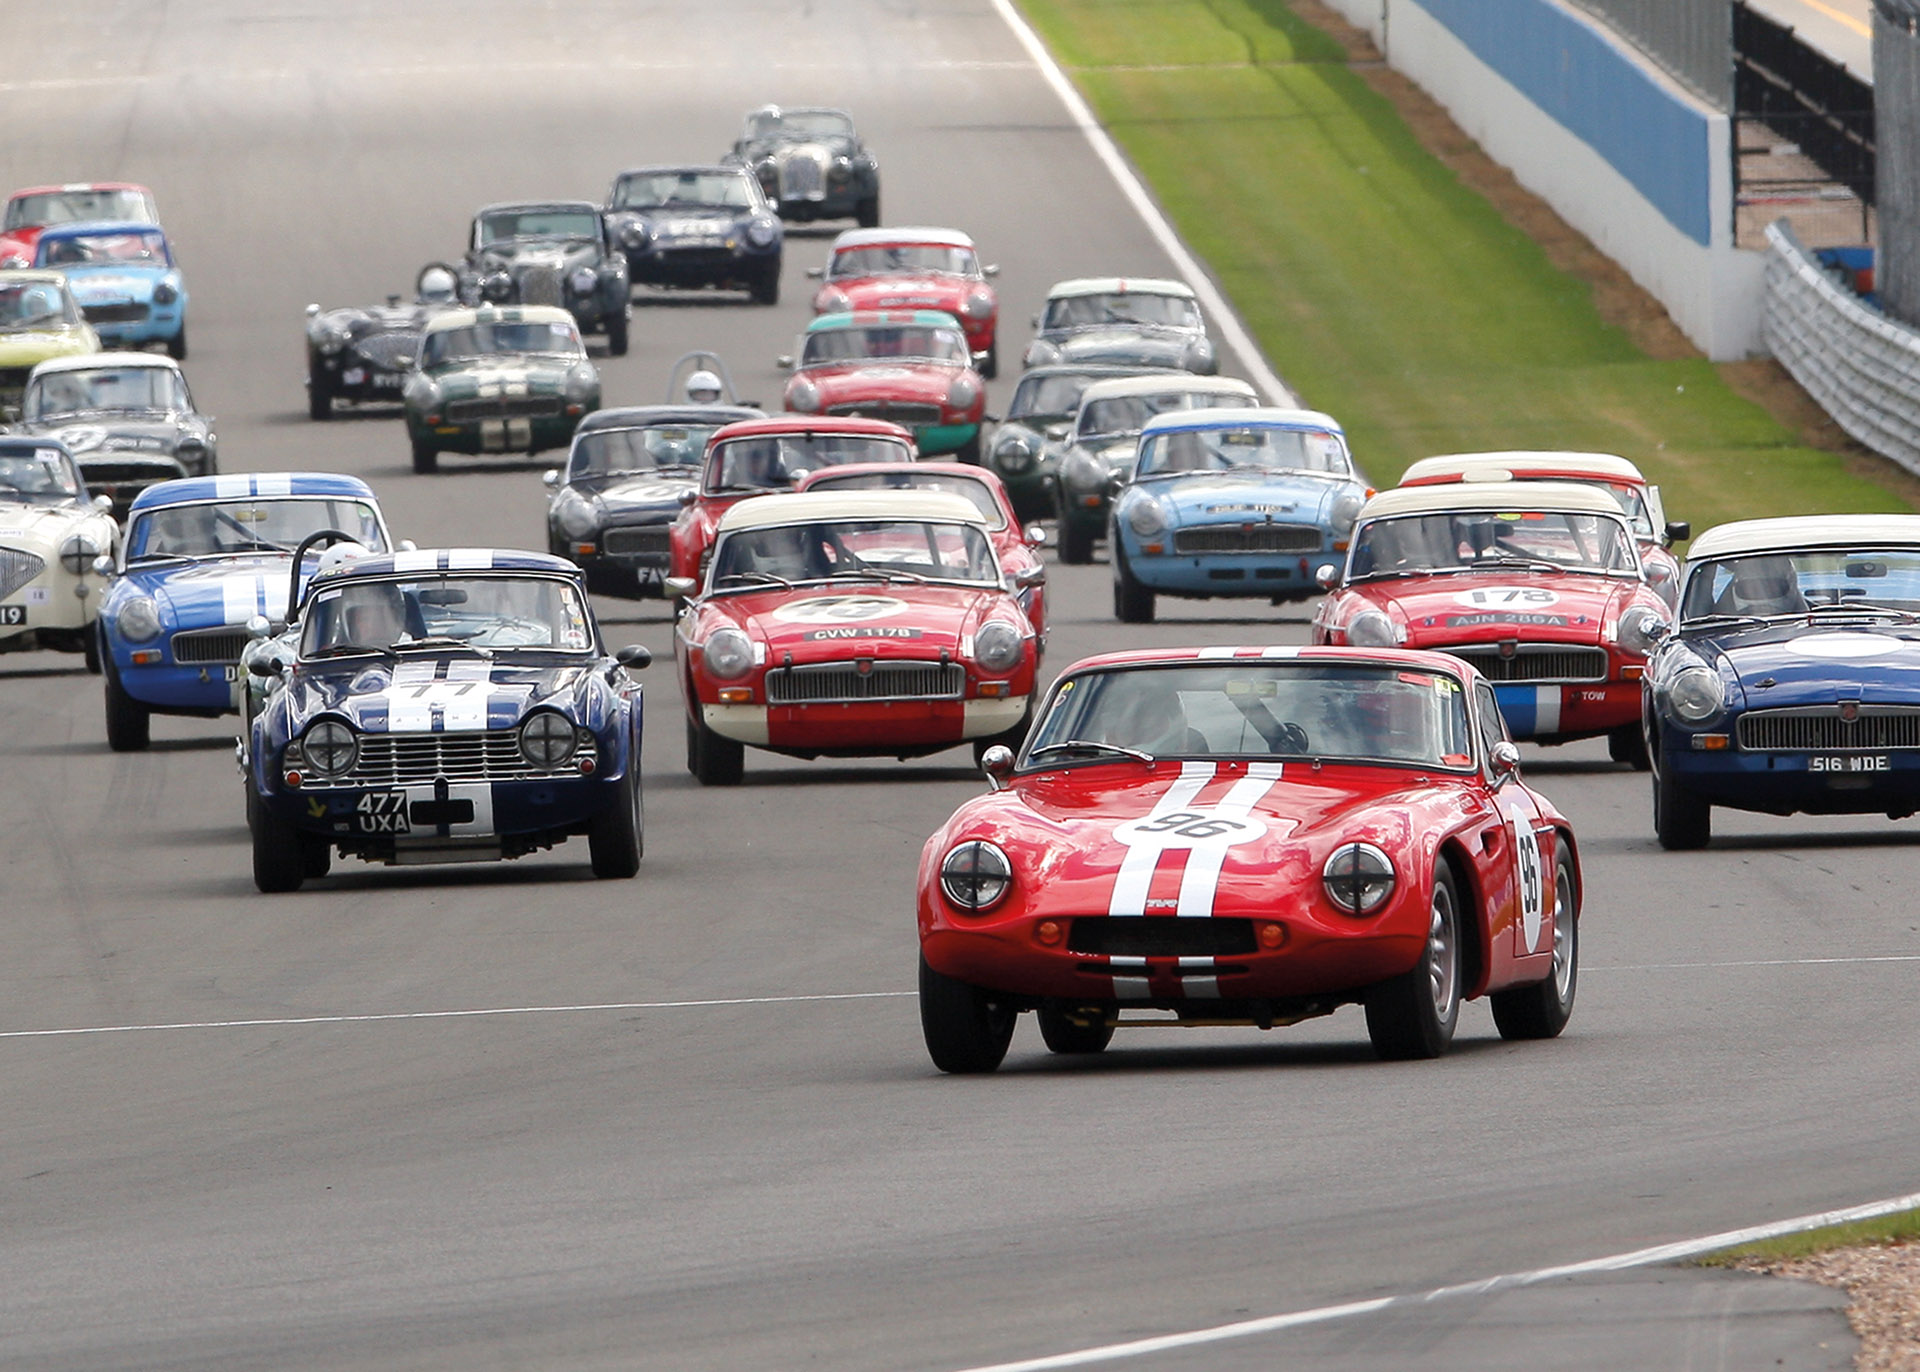 The Equipe GTS Classic Racing series at Donington Park circuit